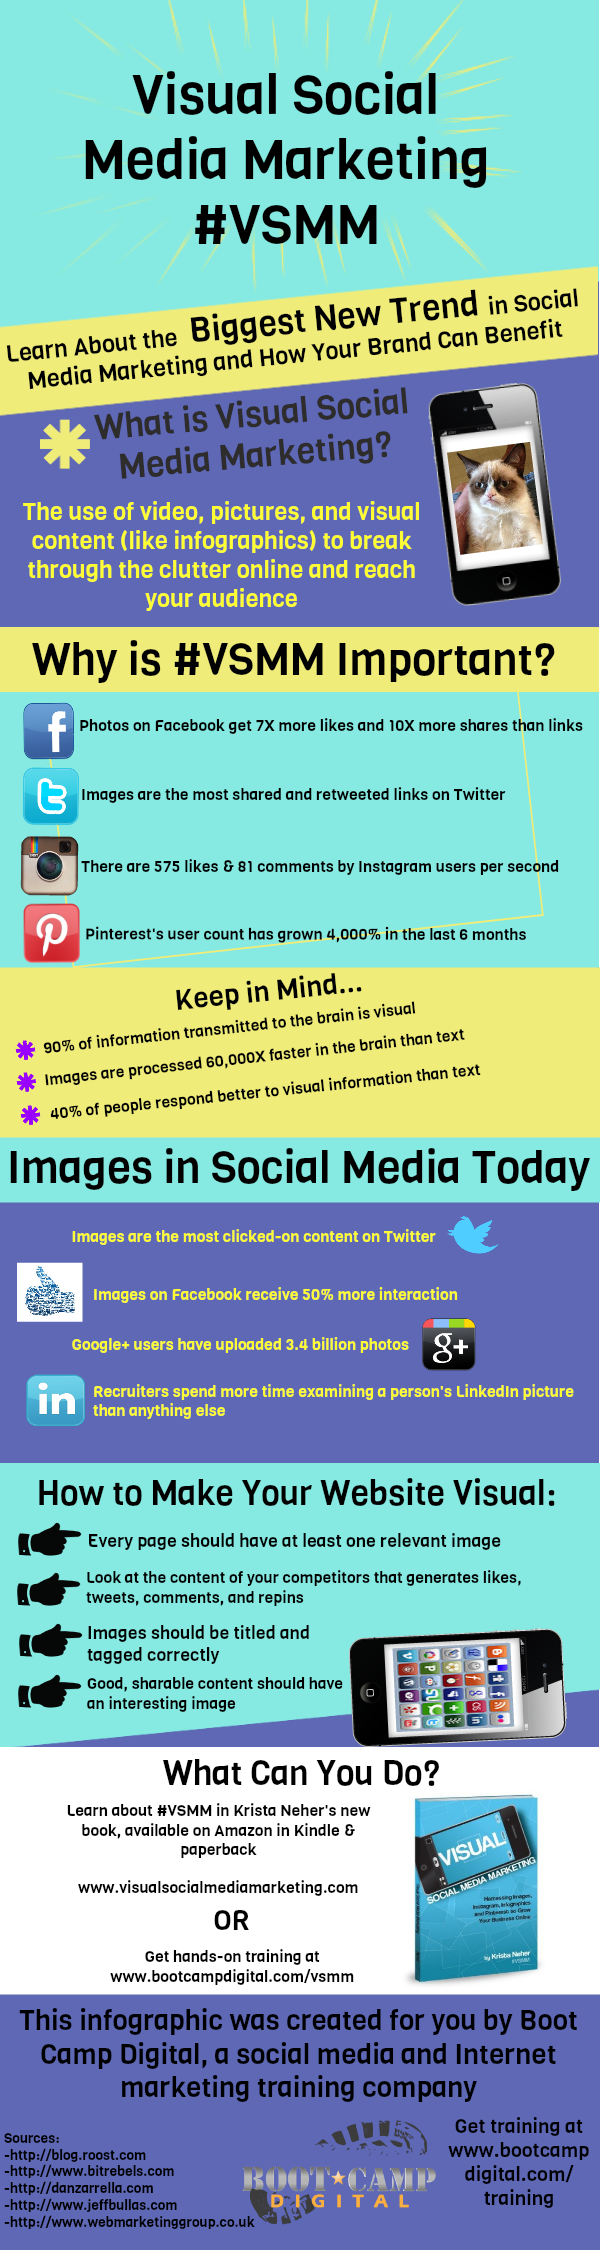 infographic-visual-social-media-marketing